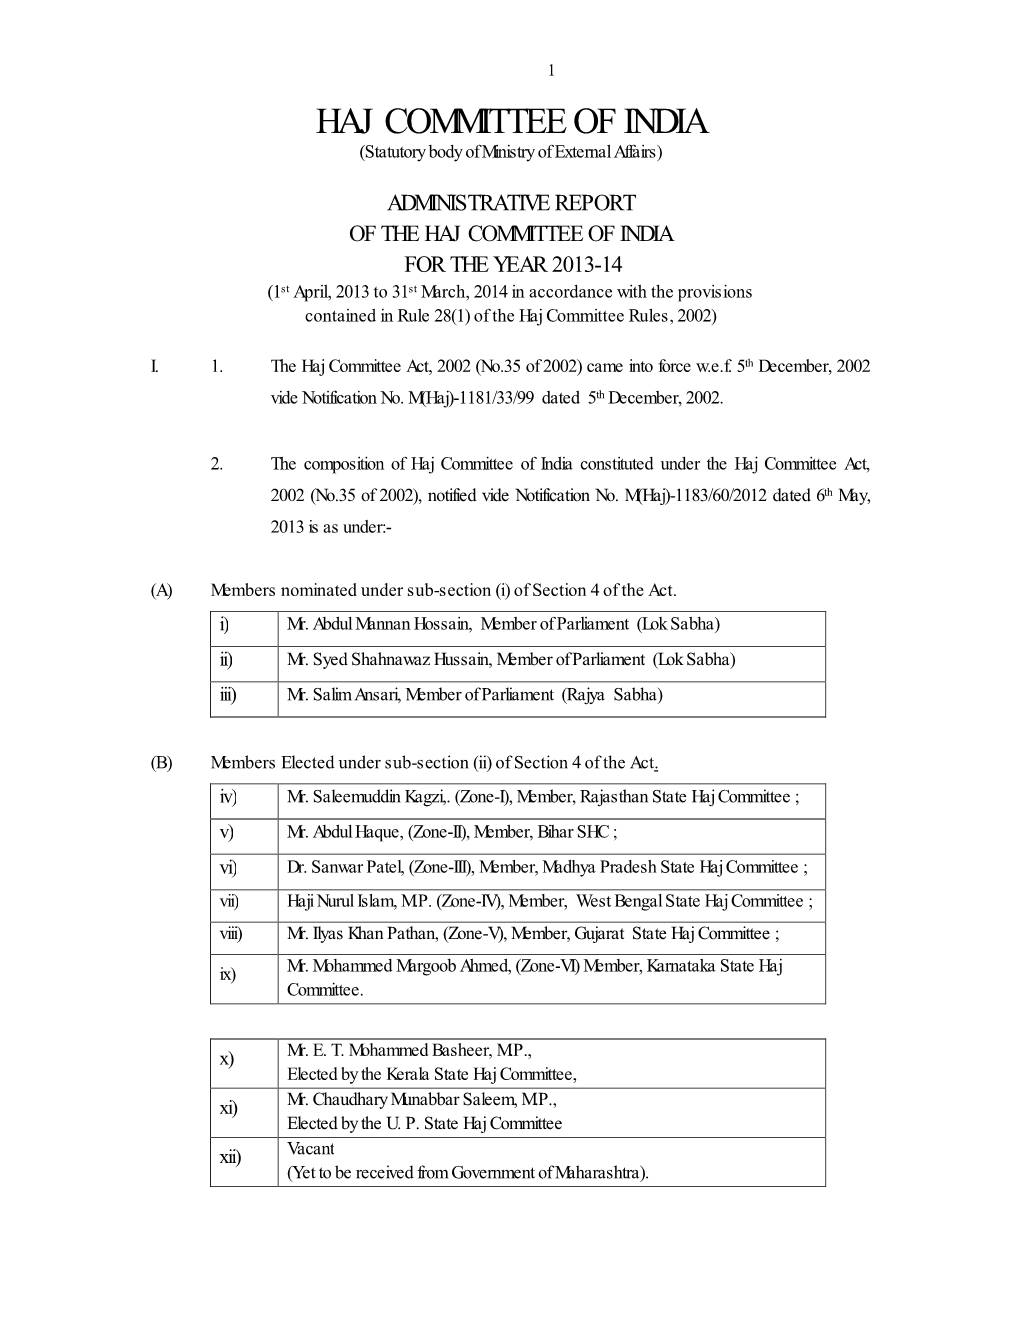 HAJ COMMITTEE of INDIA (Statutory Body of Ministry of External Affairs)